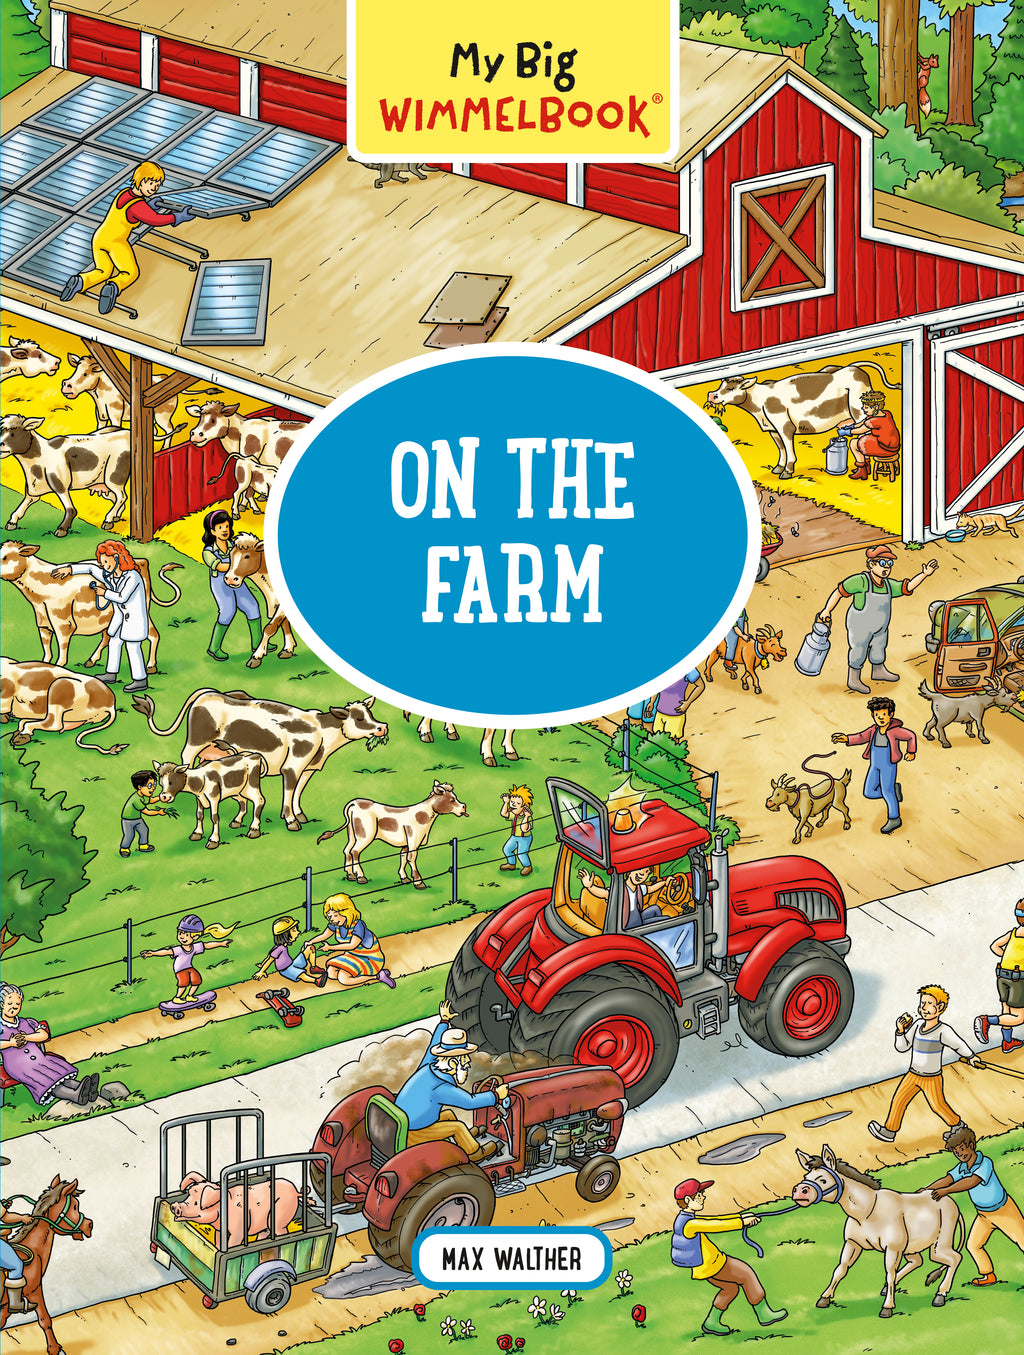 My Big Wimmel Book- On the Farm